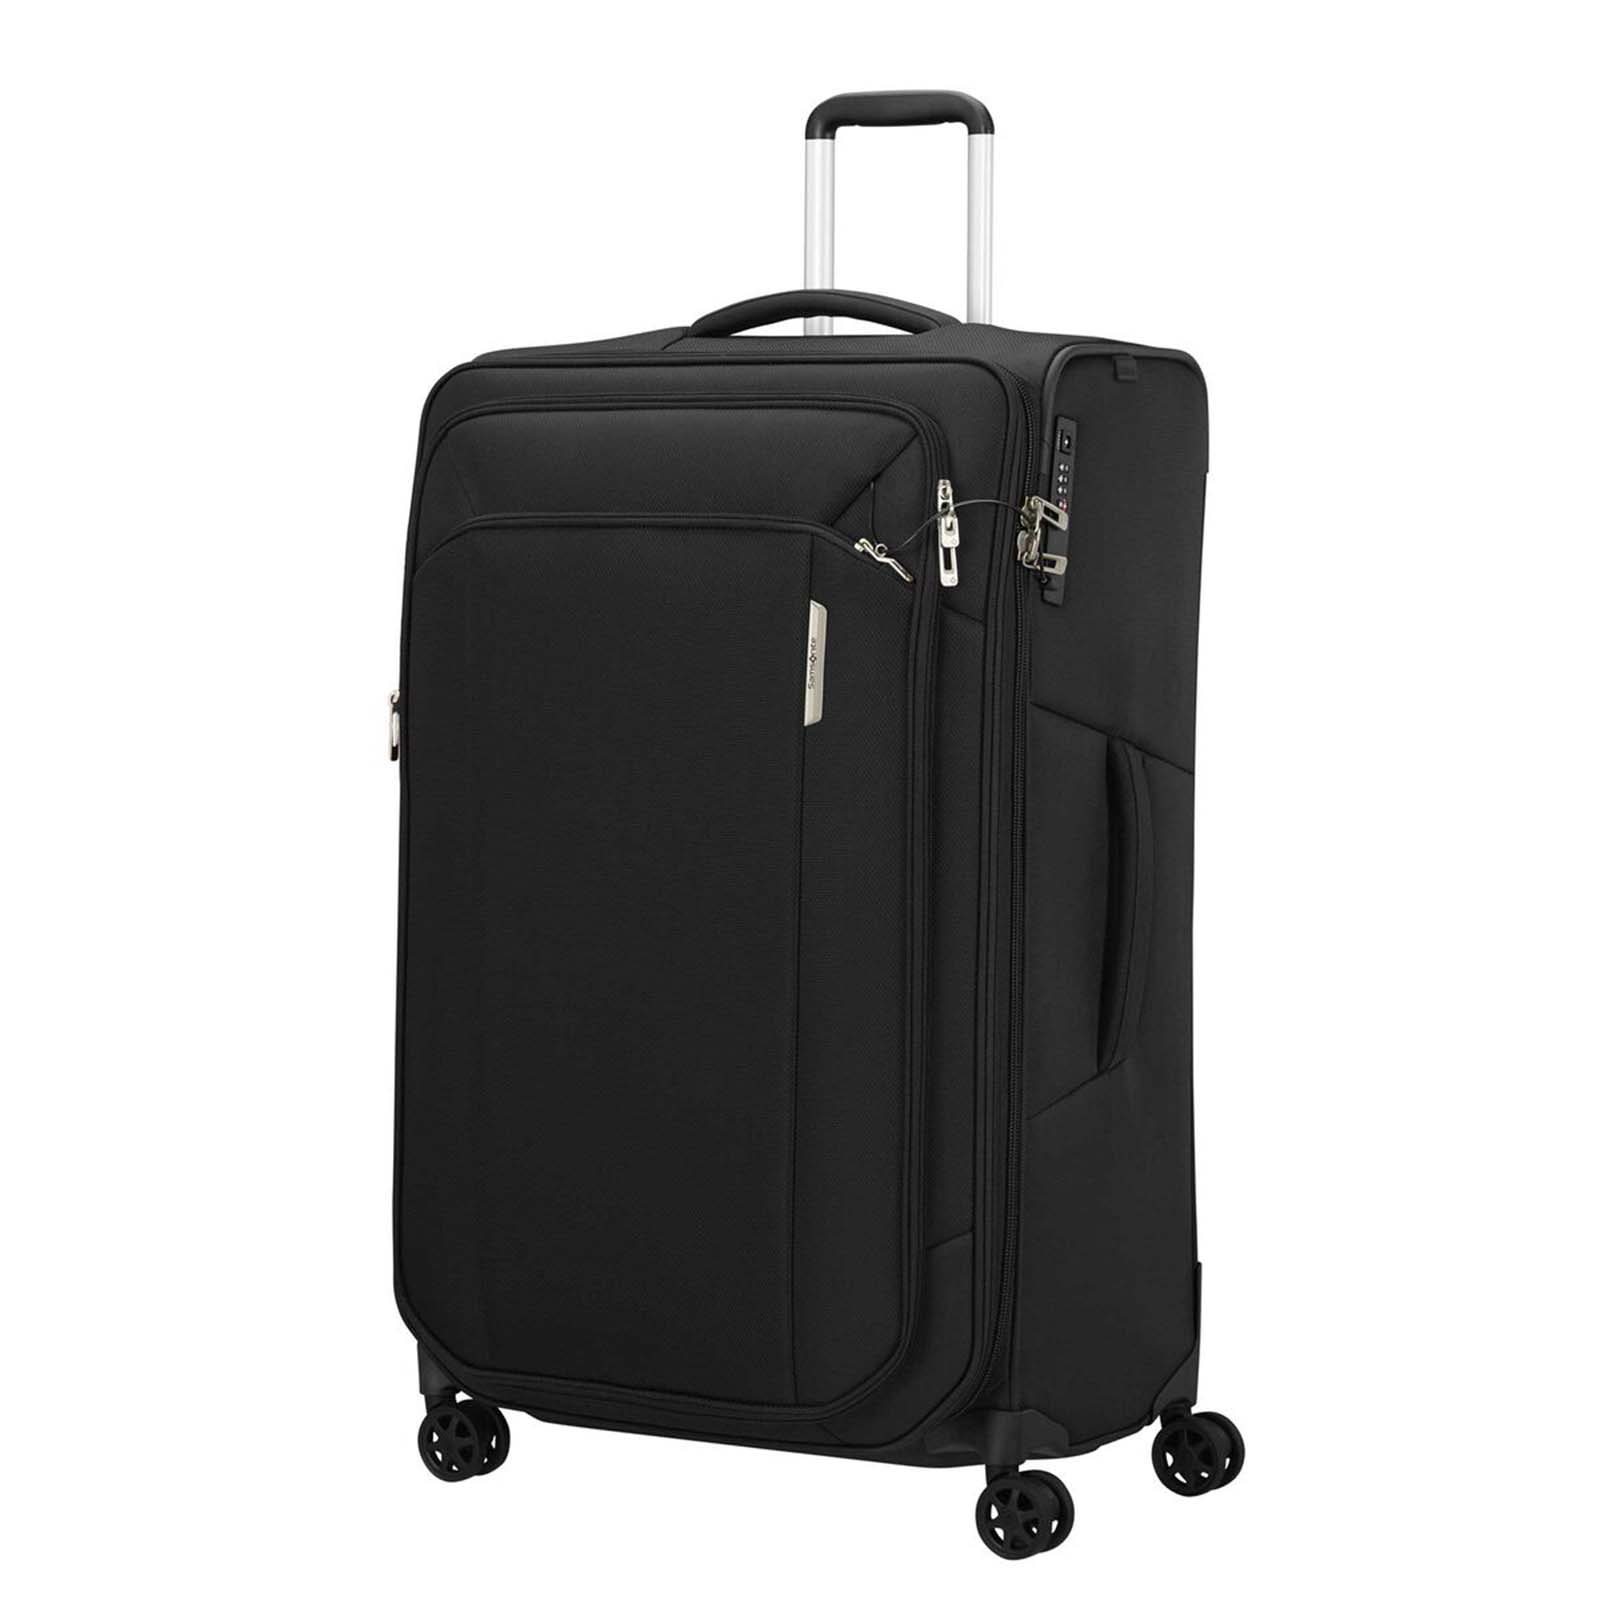 Samsonite-Respark-78cm-Suitcase-Ozone-Black-Front-Angle